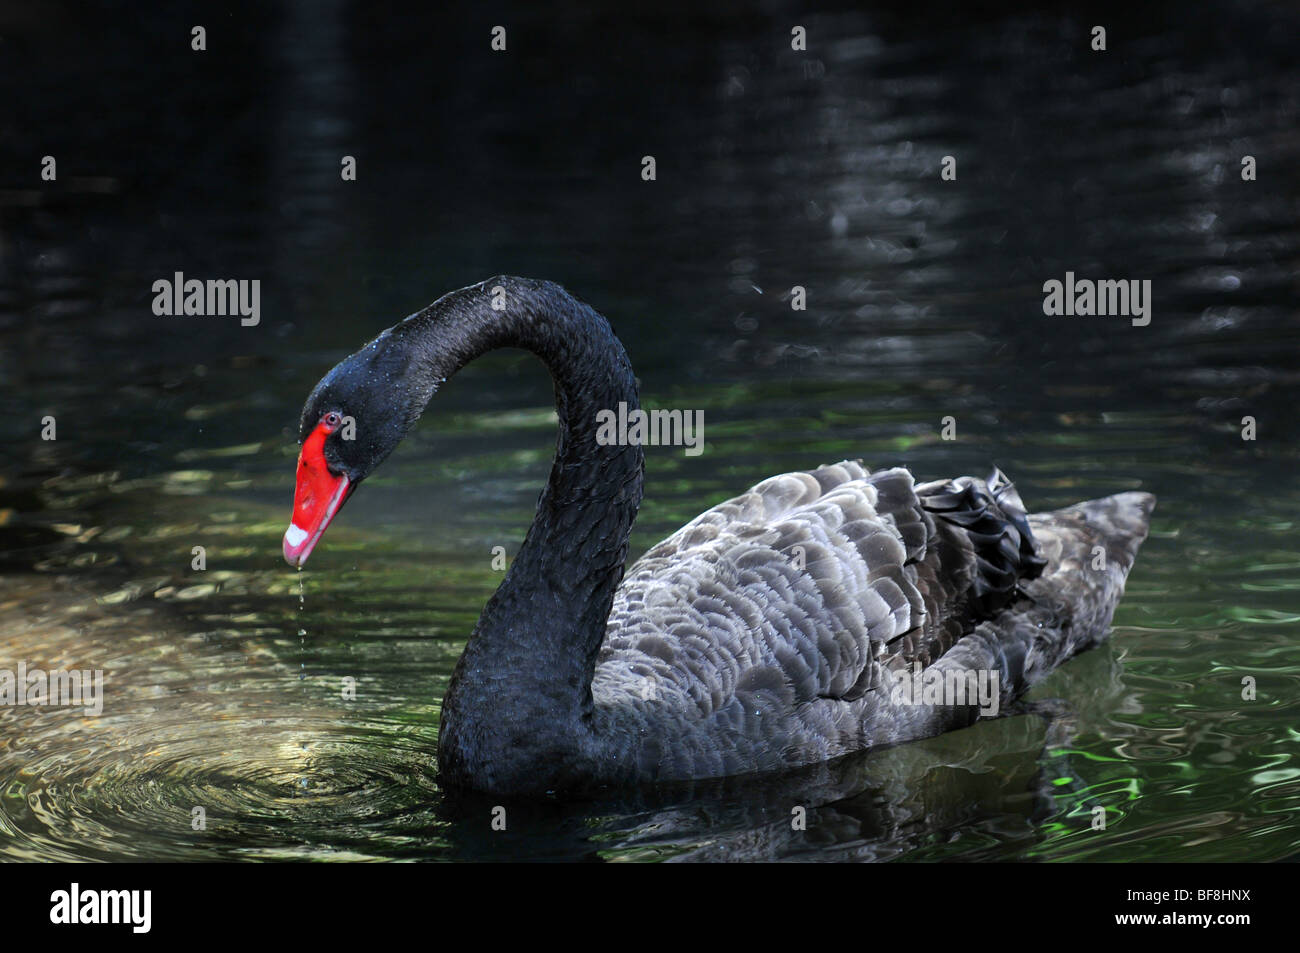 Cisne negro de un estanque de agua potable Foto de stock